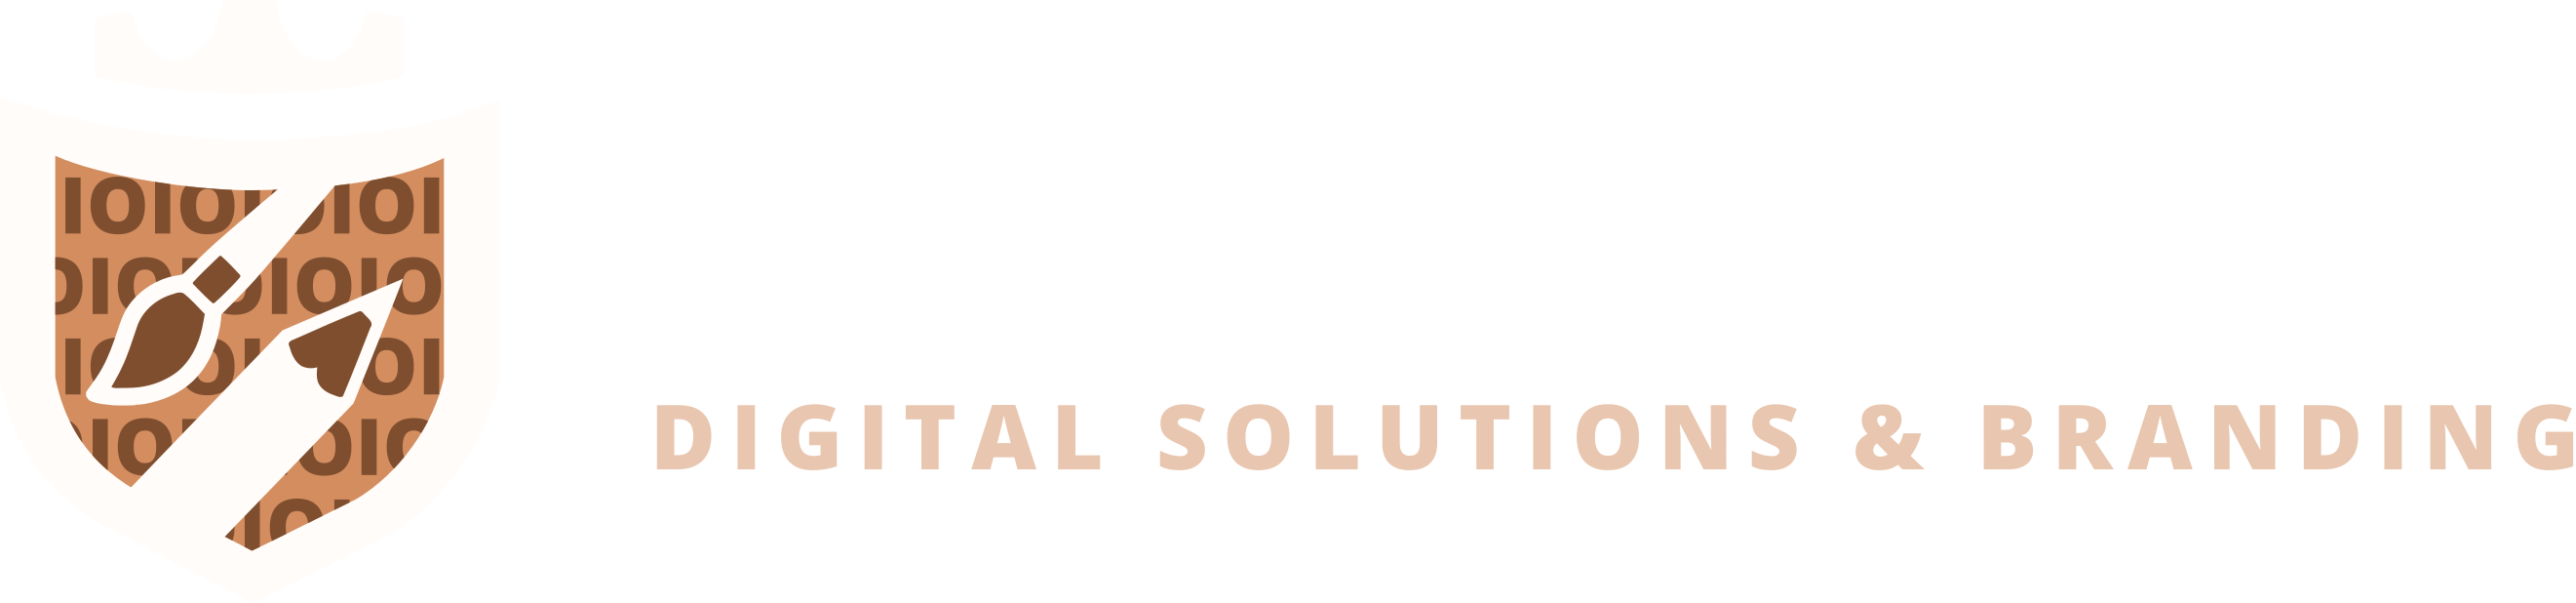 KronStudio: Digital Solutions & Branding